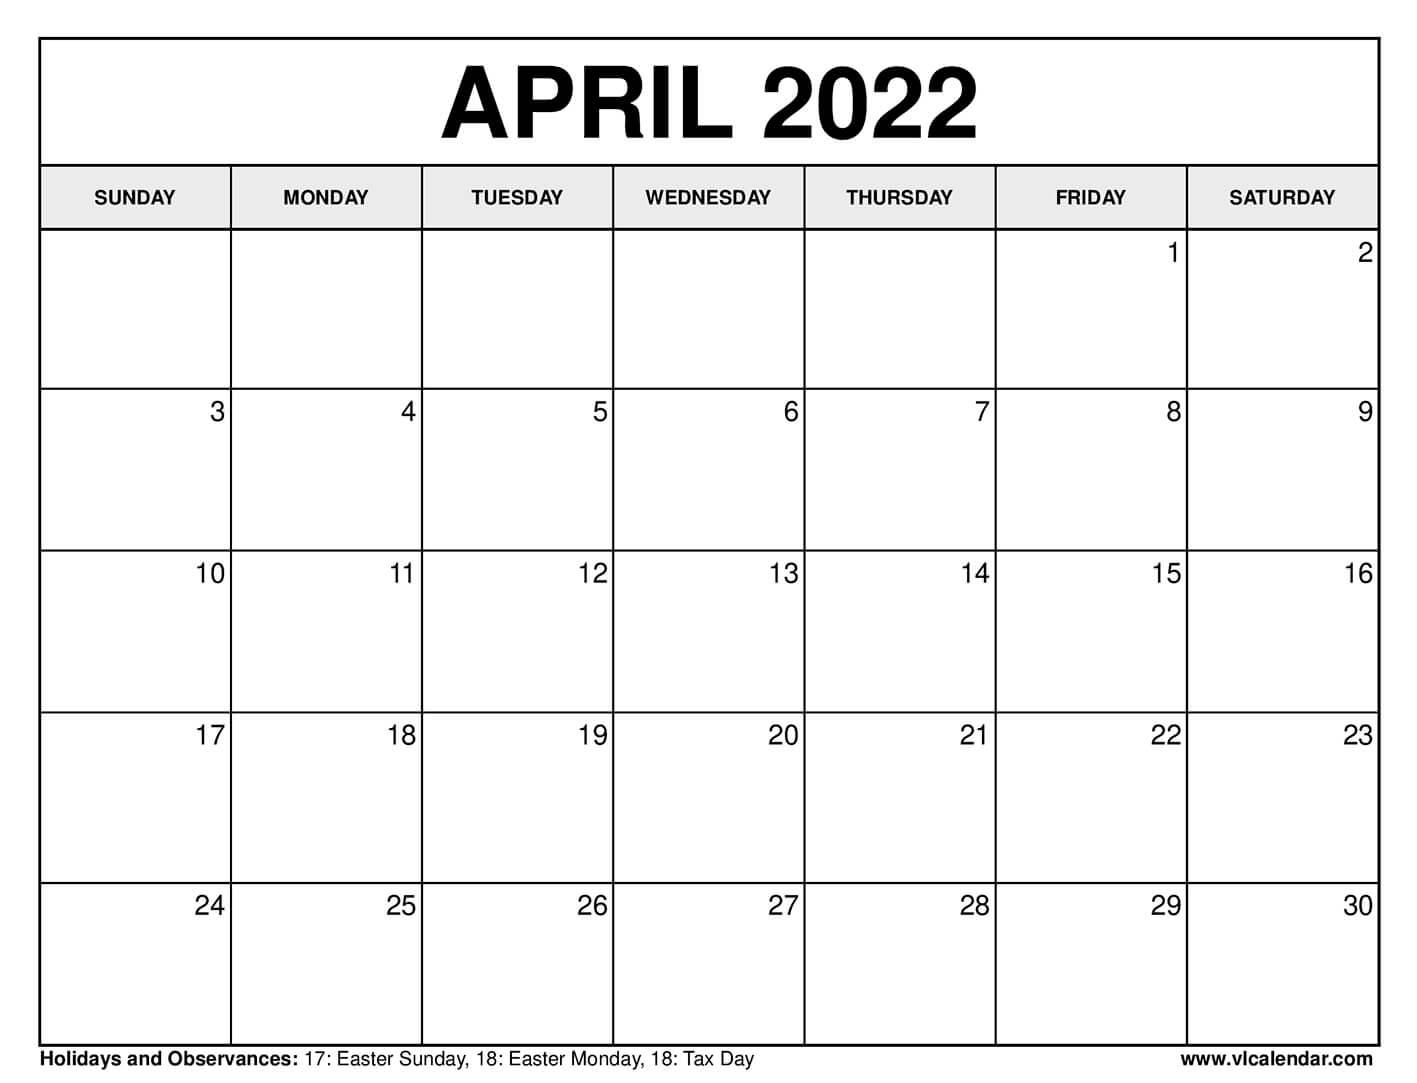 Print A Calendar April 2022 Printable April 2022 Calendar Templates With Holidays - Vl Calendar